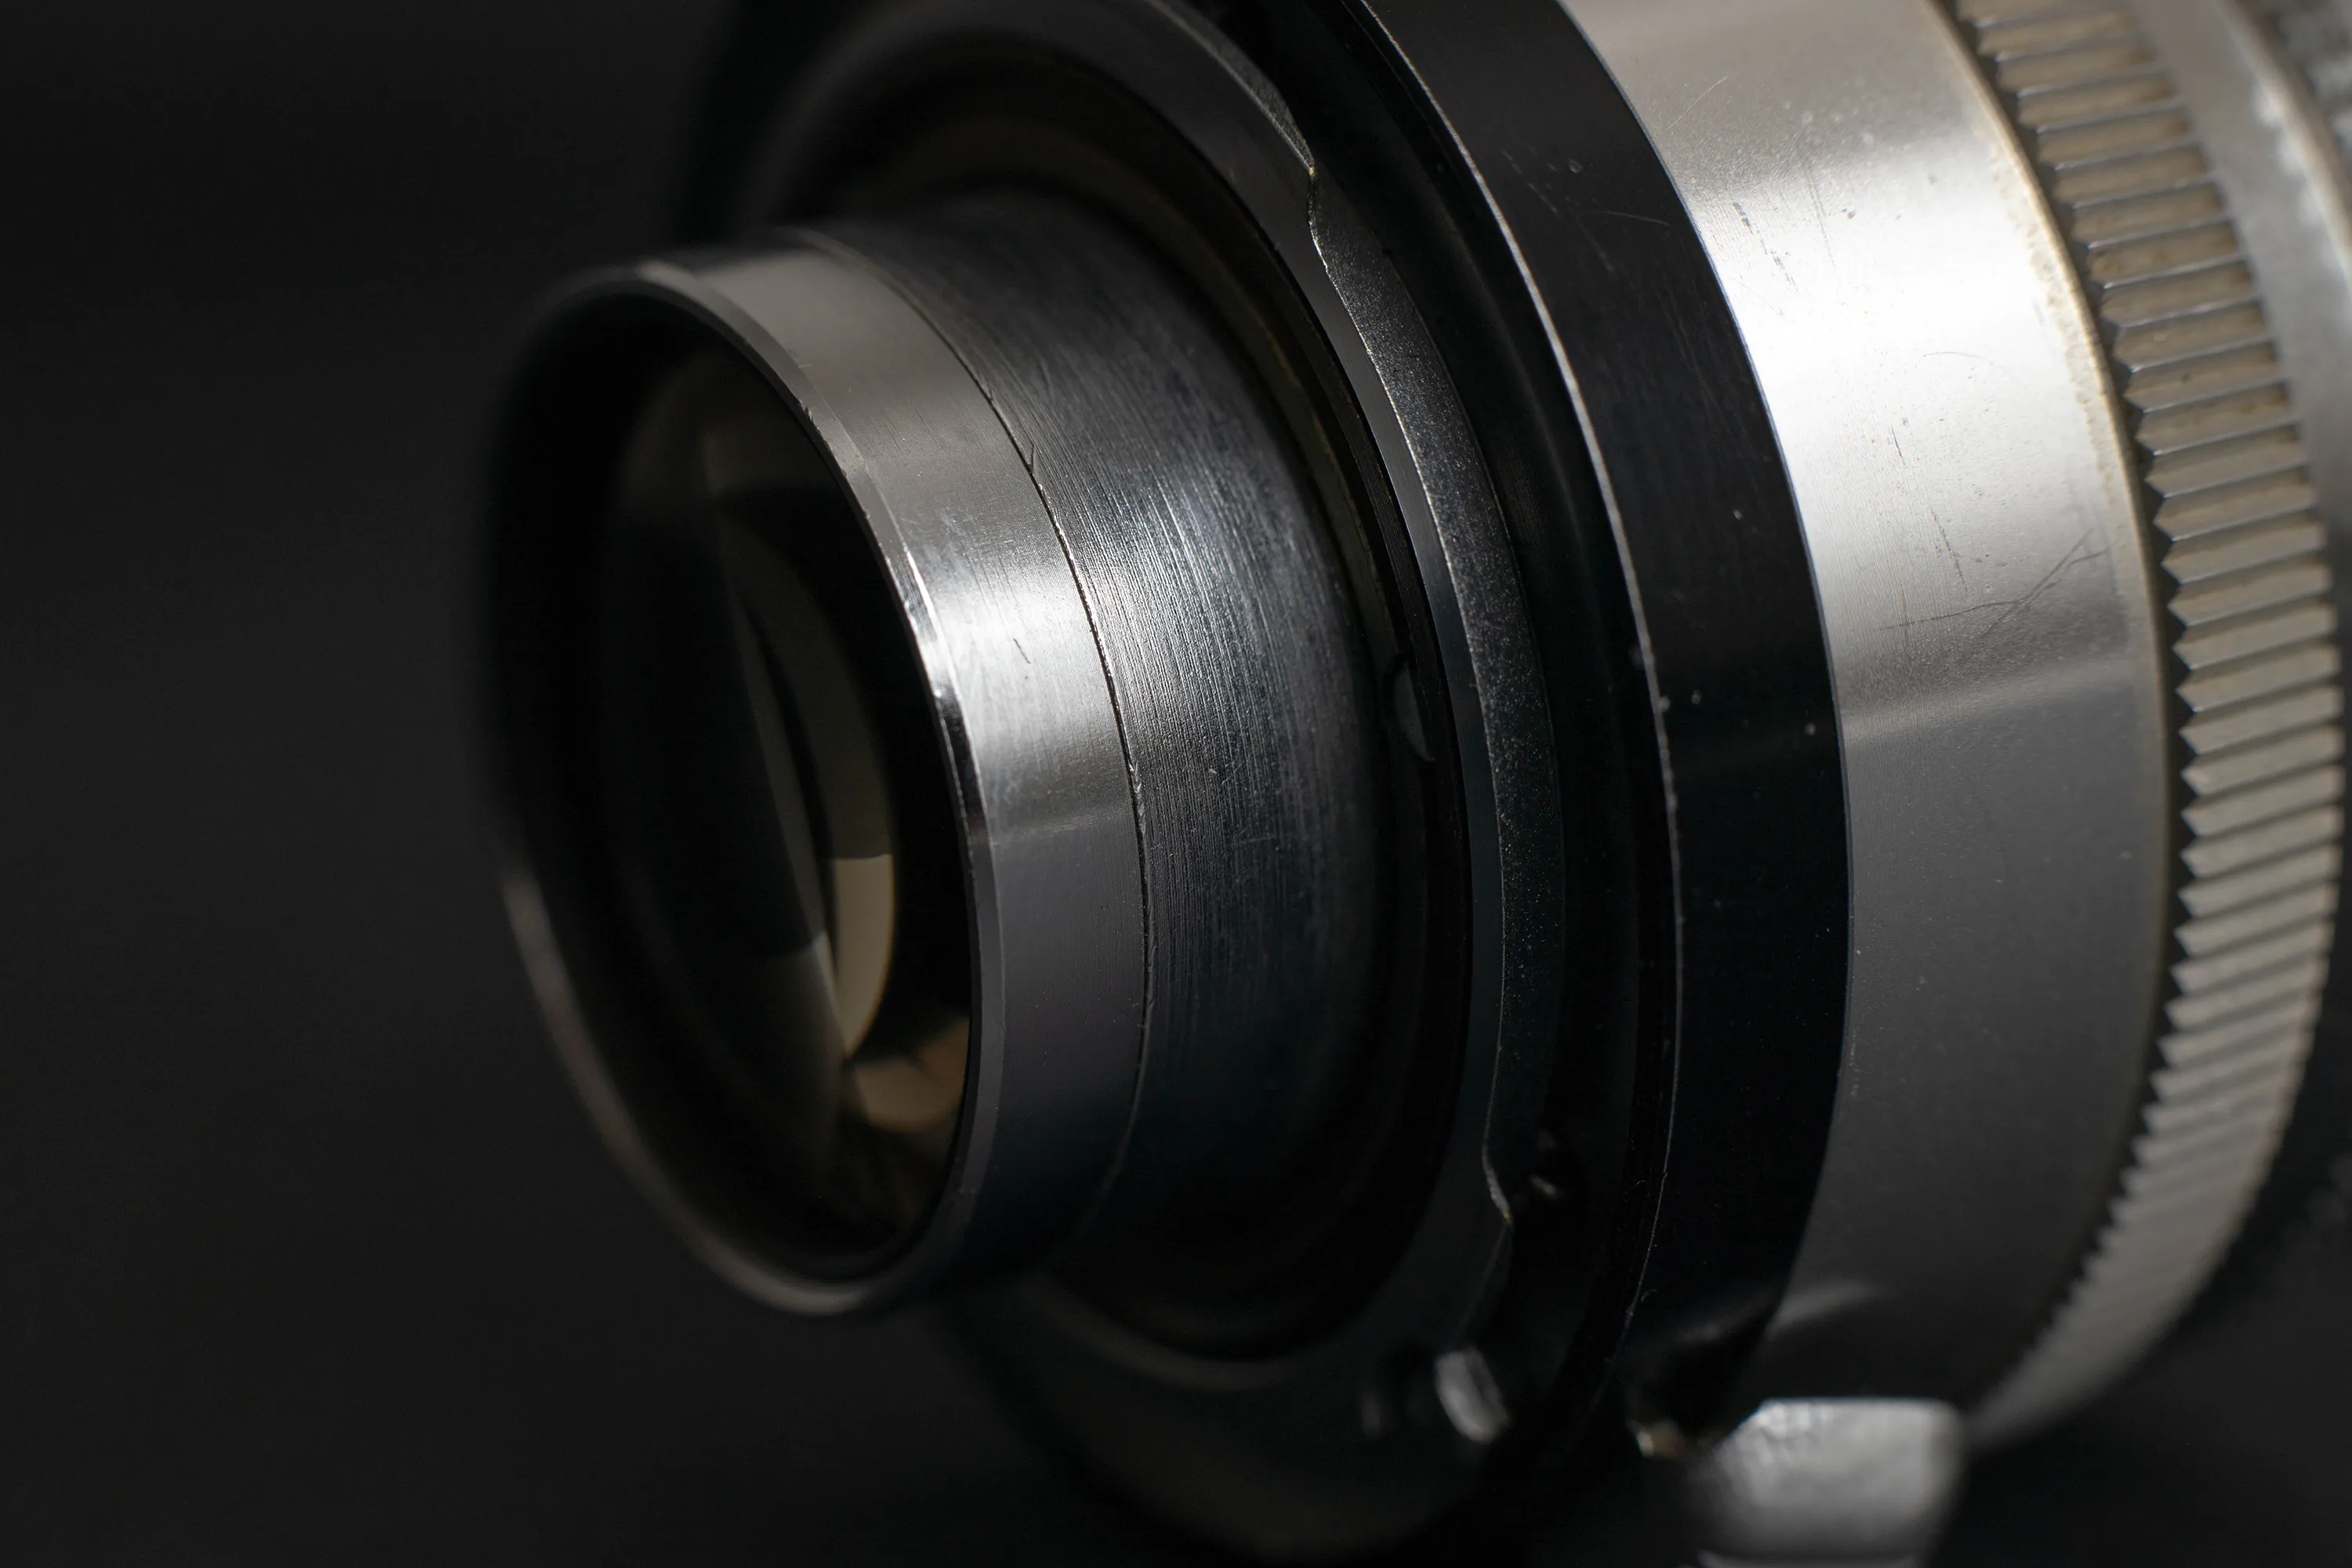 Closeup view of the rear lens mount of the Voigtlander Nokton 50mm f1.5